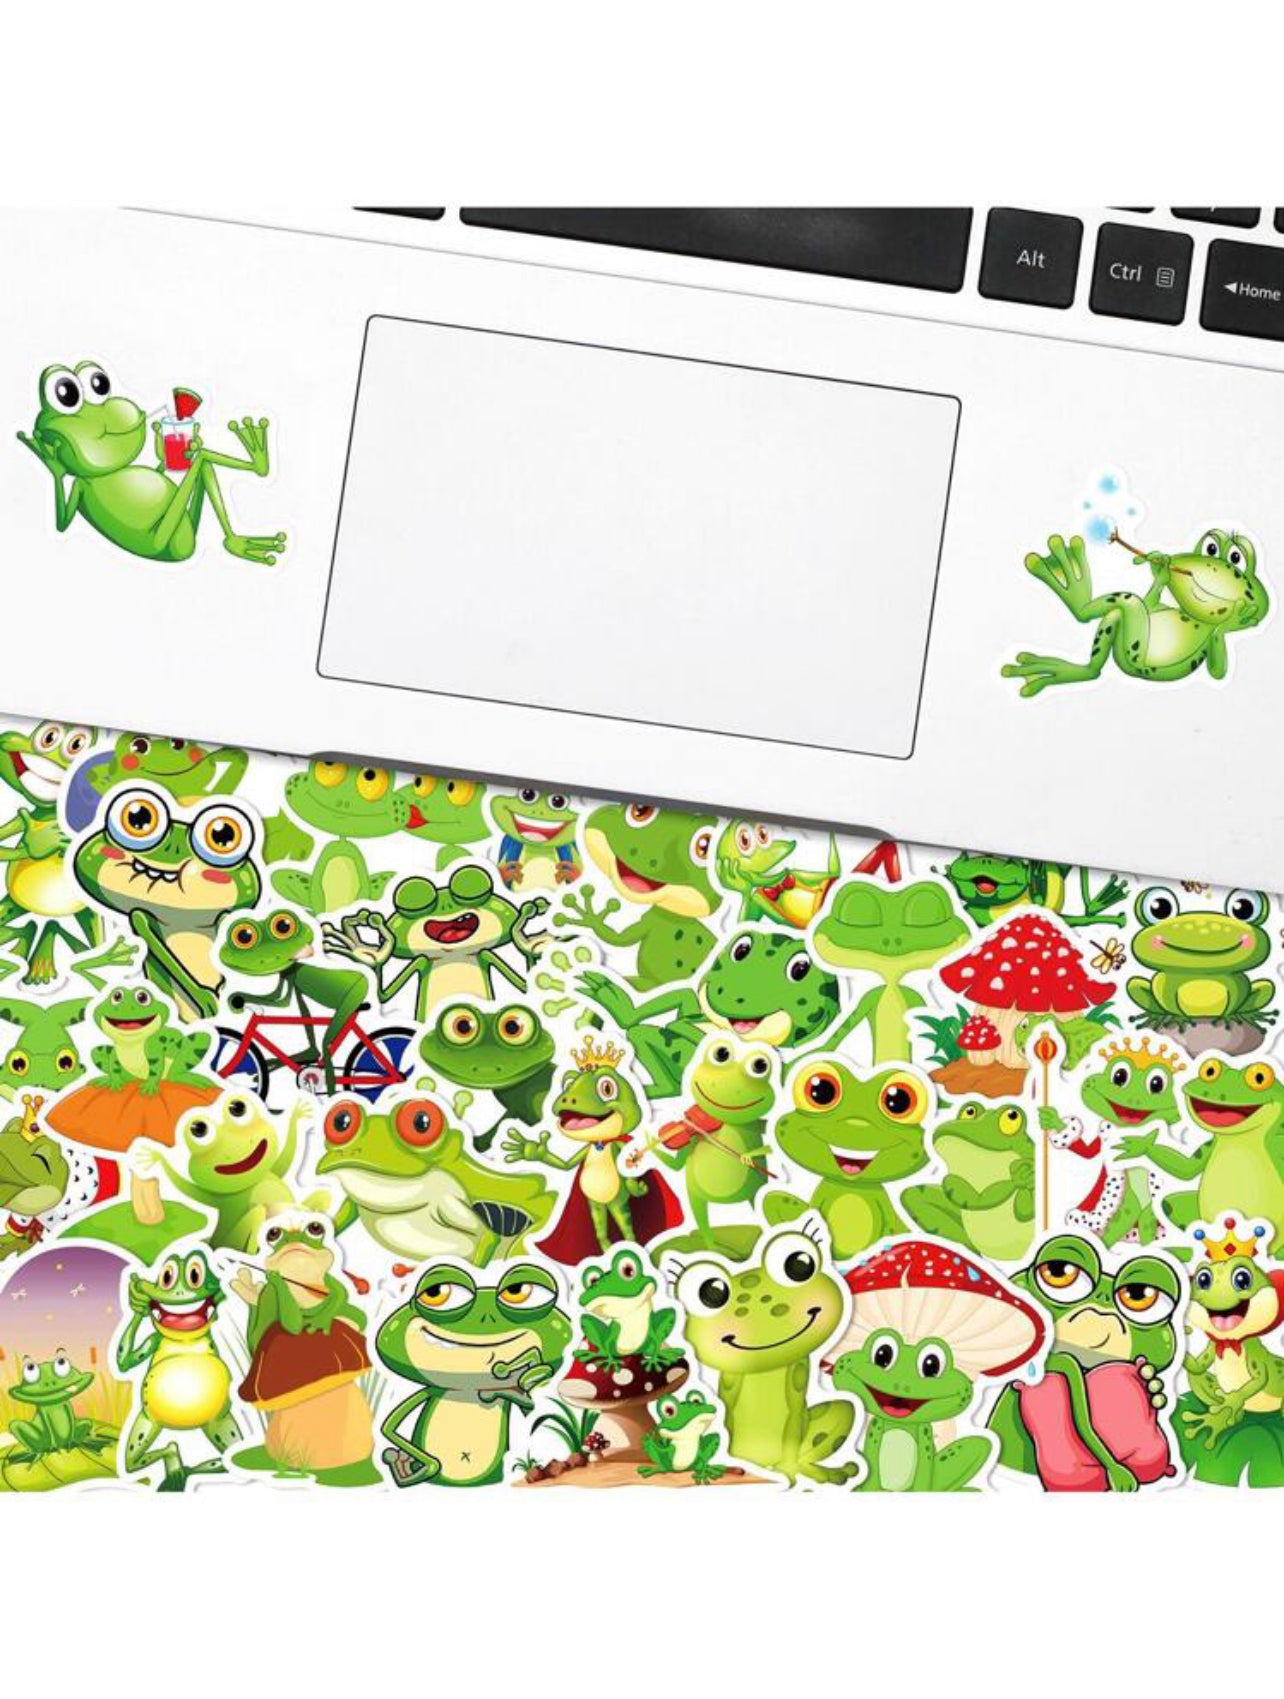 Frog King Stickers Mega Pack